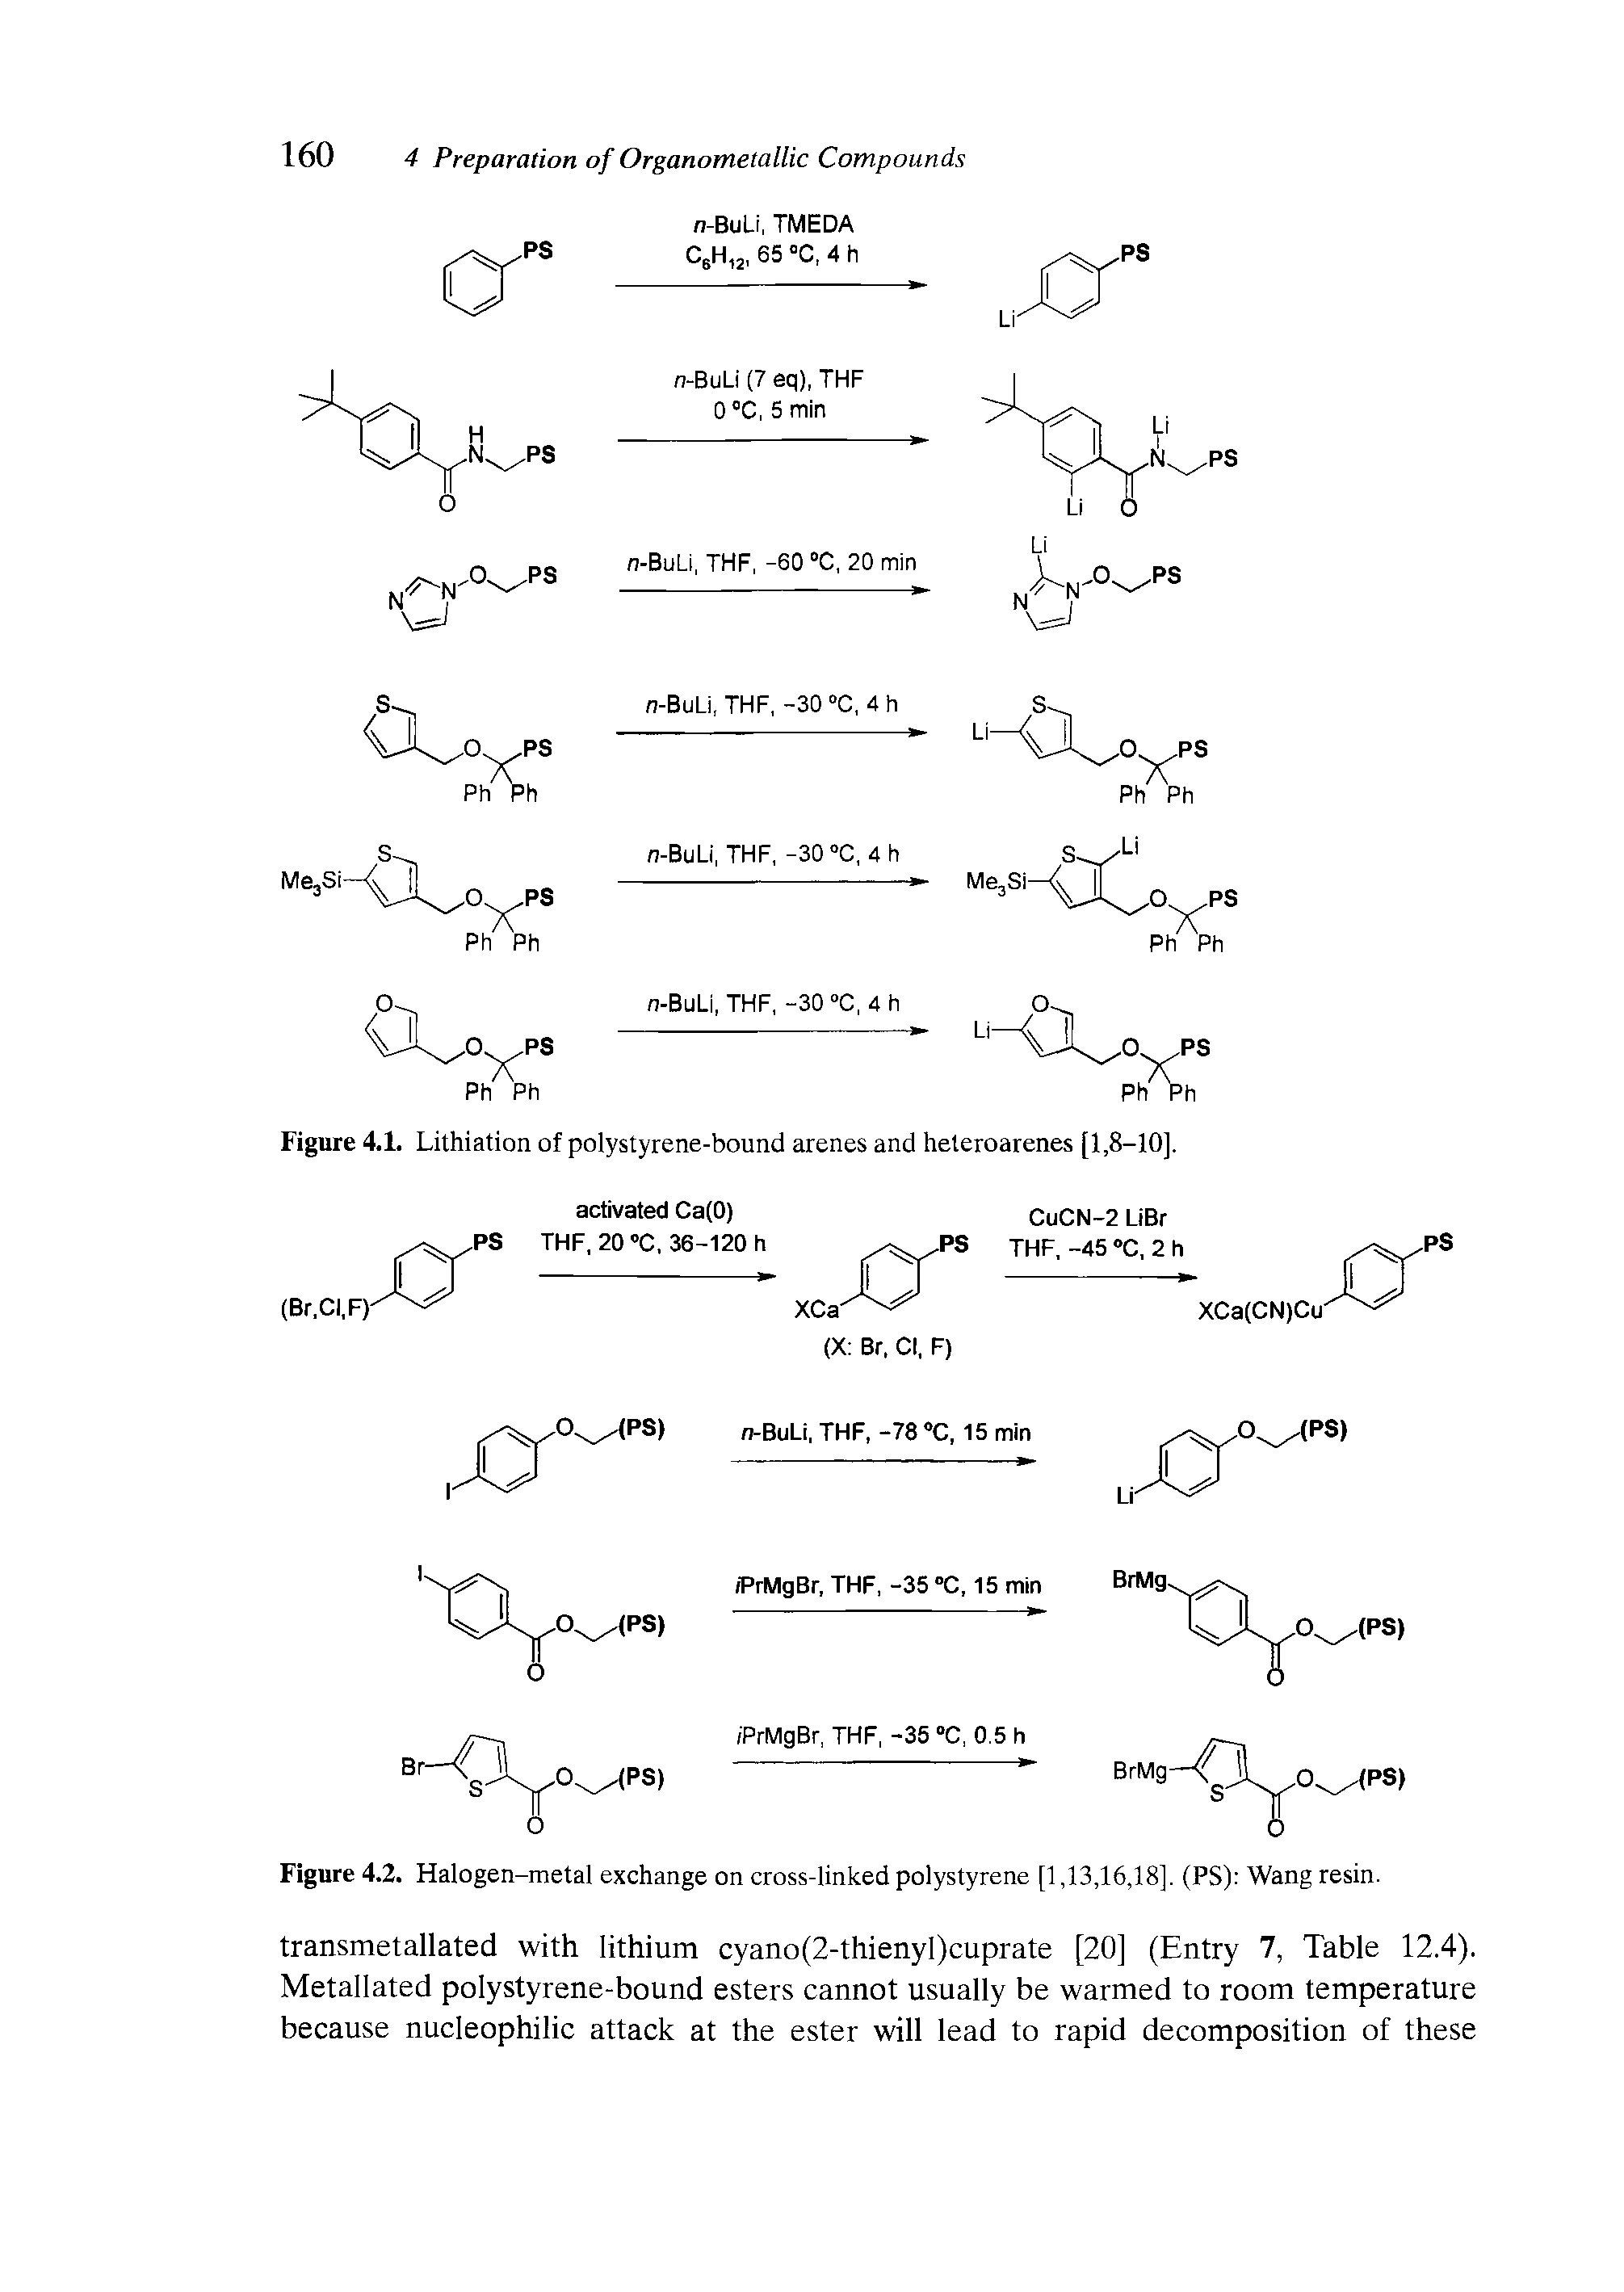 Figure 4.2. Halogen-metal exchange on cross-linked polystyrene [1,13,16,18], (PS) Wang resin.